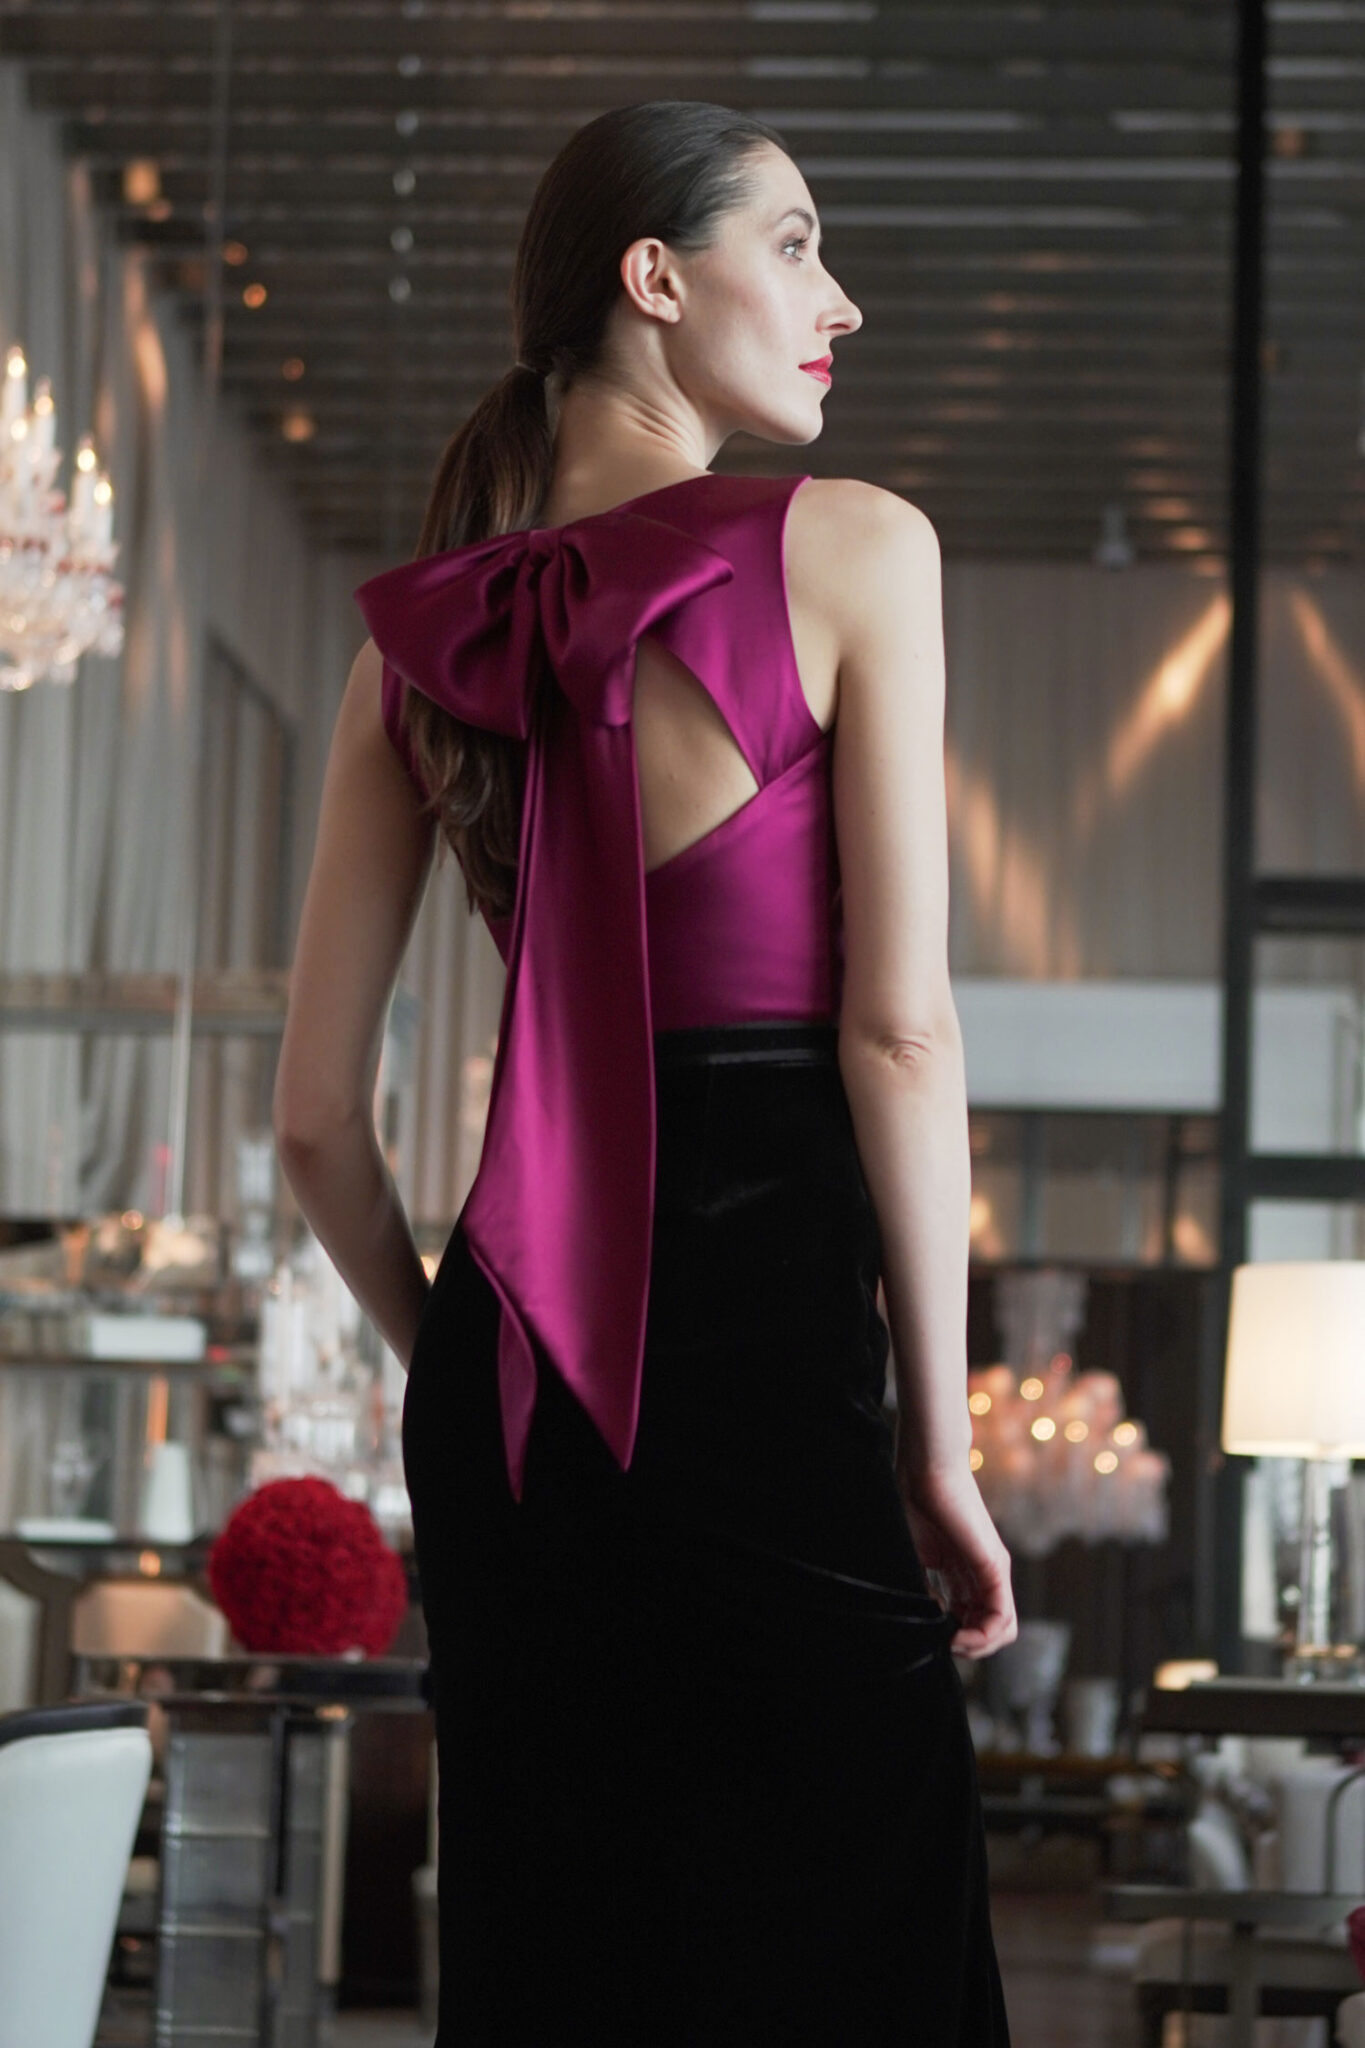 Fairytale Look 7 - Elegant dress for special occasions in purple - Verdin New York